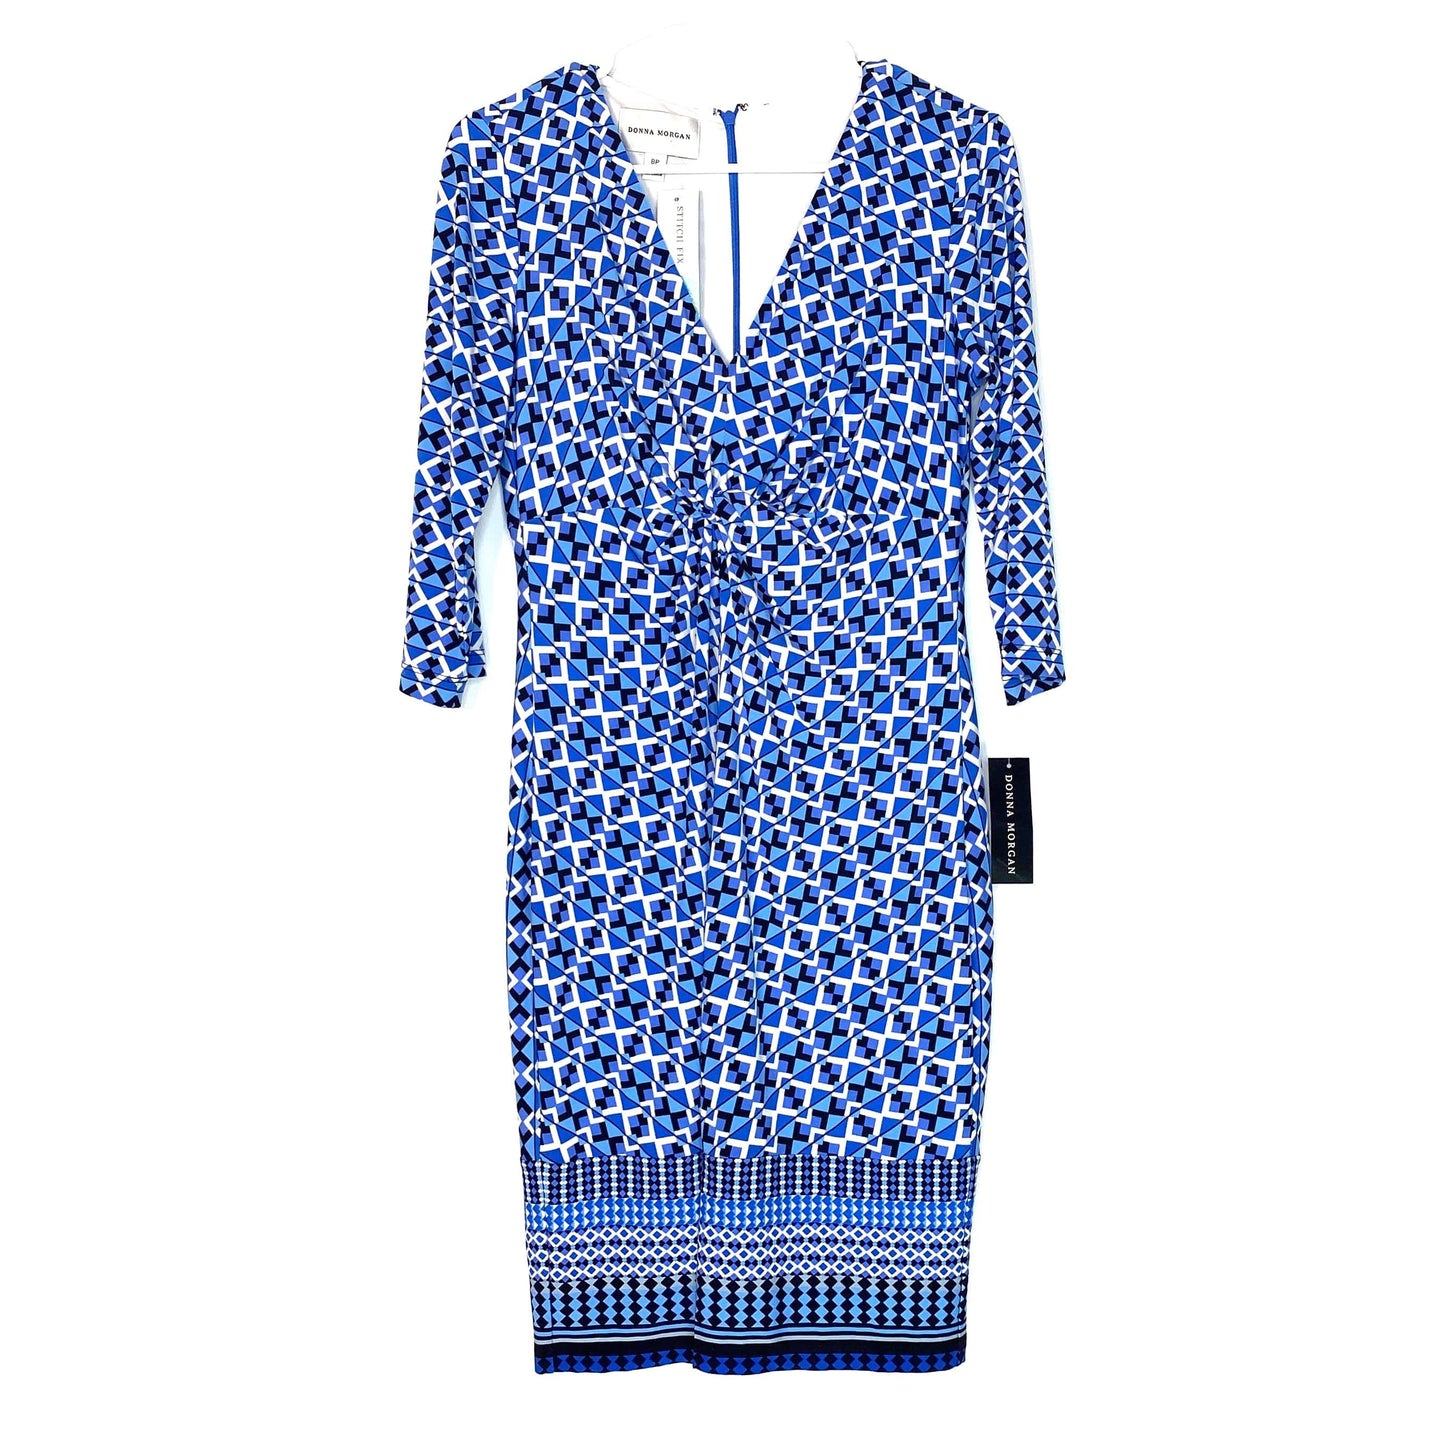 Donna Morgan Women Shift Dress “Masona” Cobalt Blue Size 8P Geometric V Neck NWT